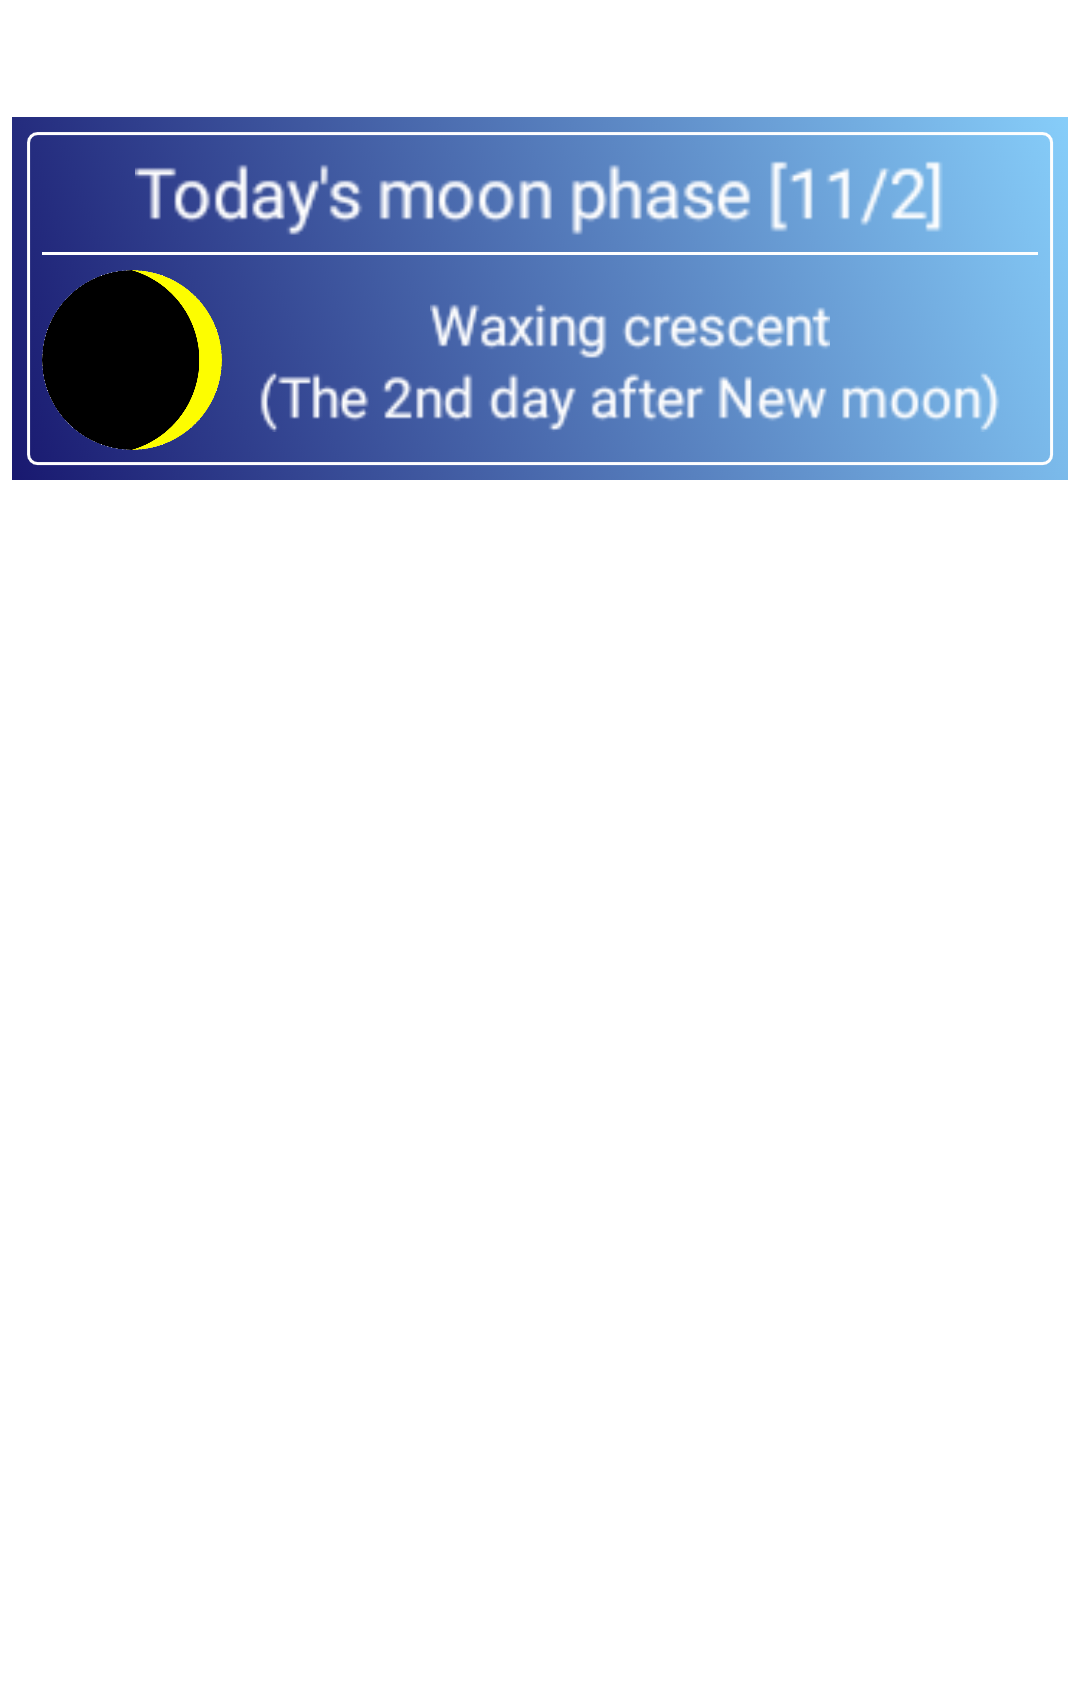 Moon Phase Checker